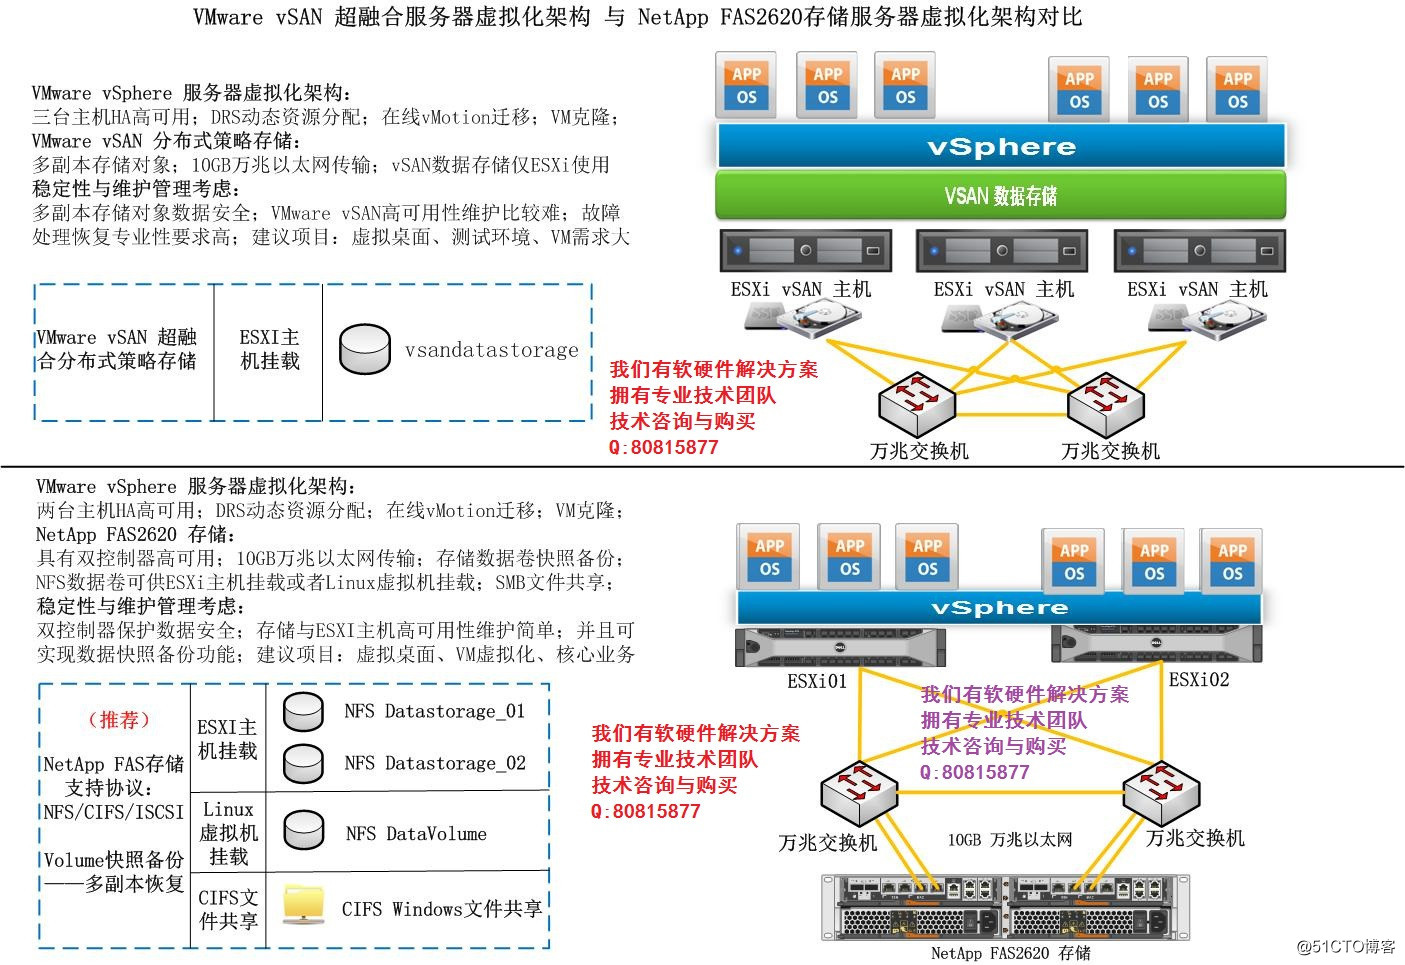 VMware vSAN超融合虚拟化架构与NetApp FAS2620存储服务器虚拟化架构对比